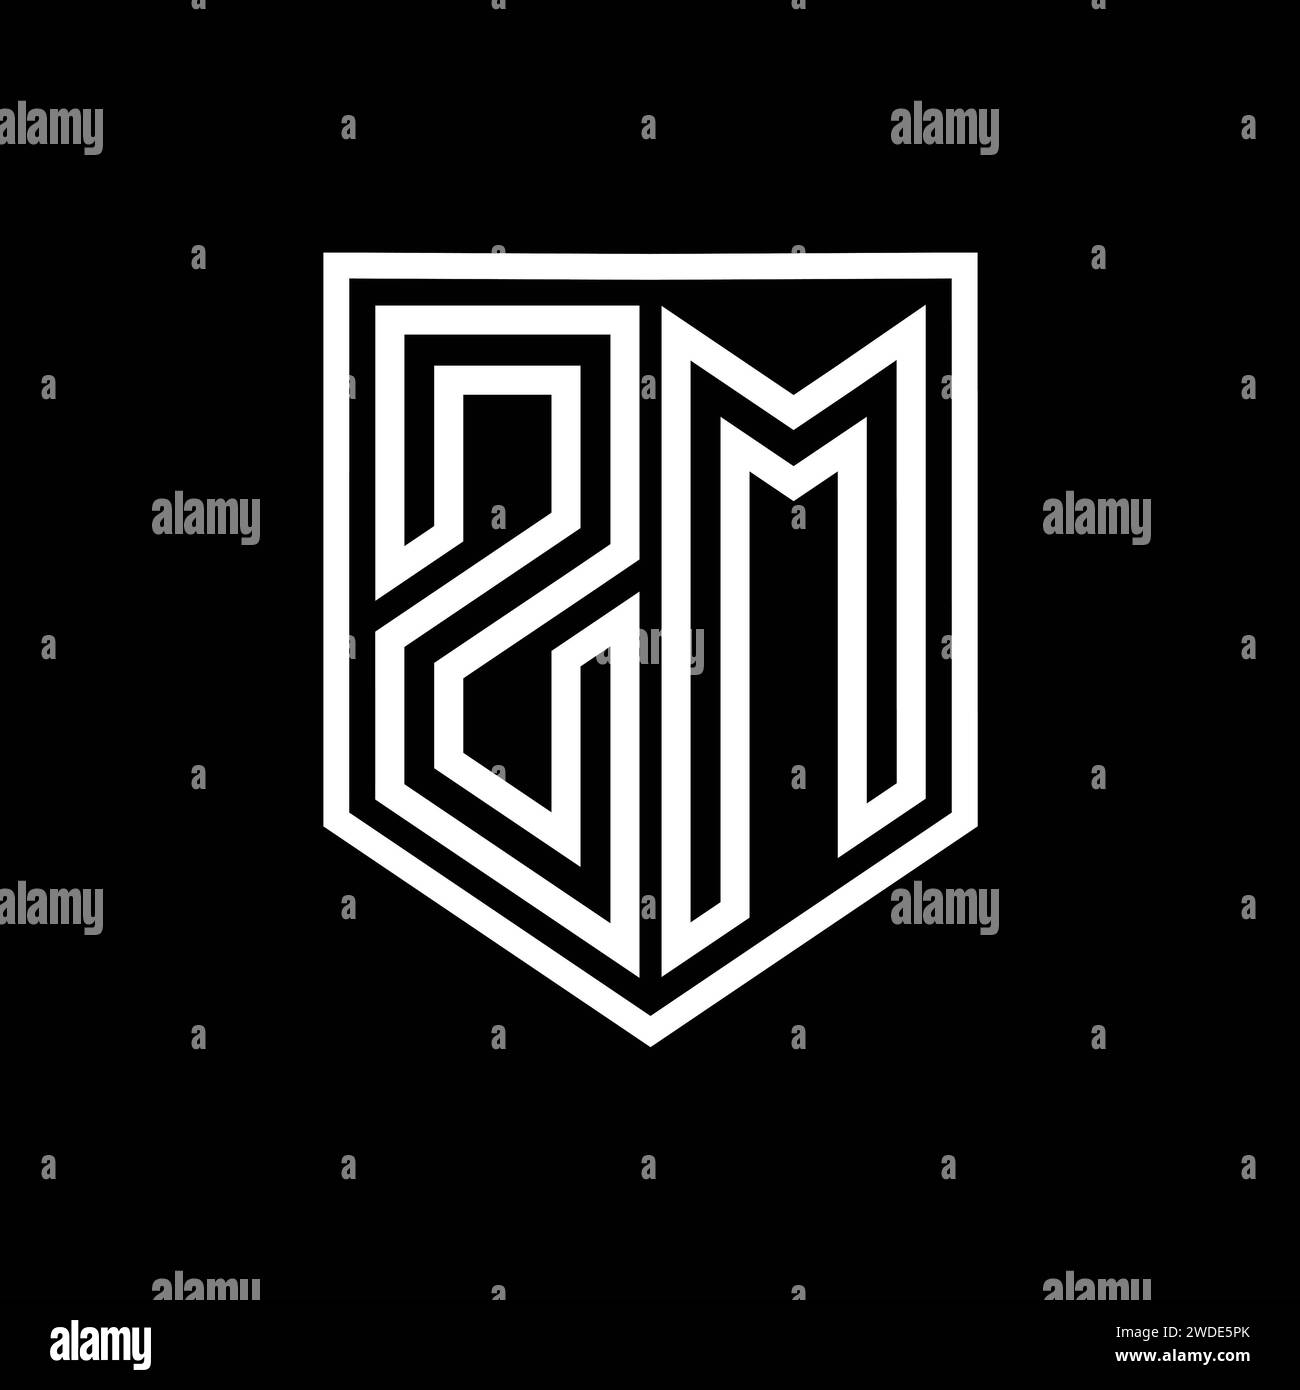 ZM Letter Logo monogram shield geometric line inside shield isolated style design template Stock Photo